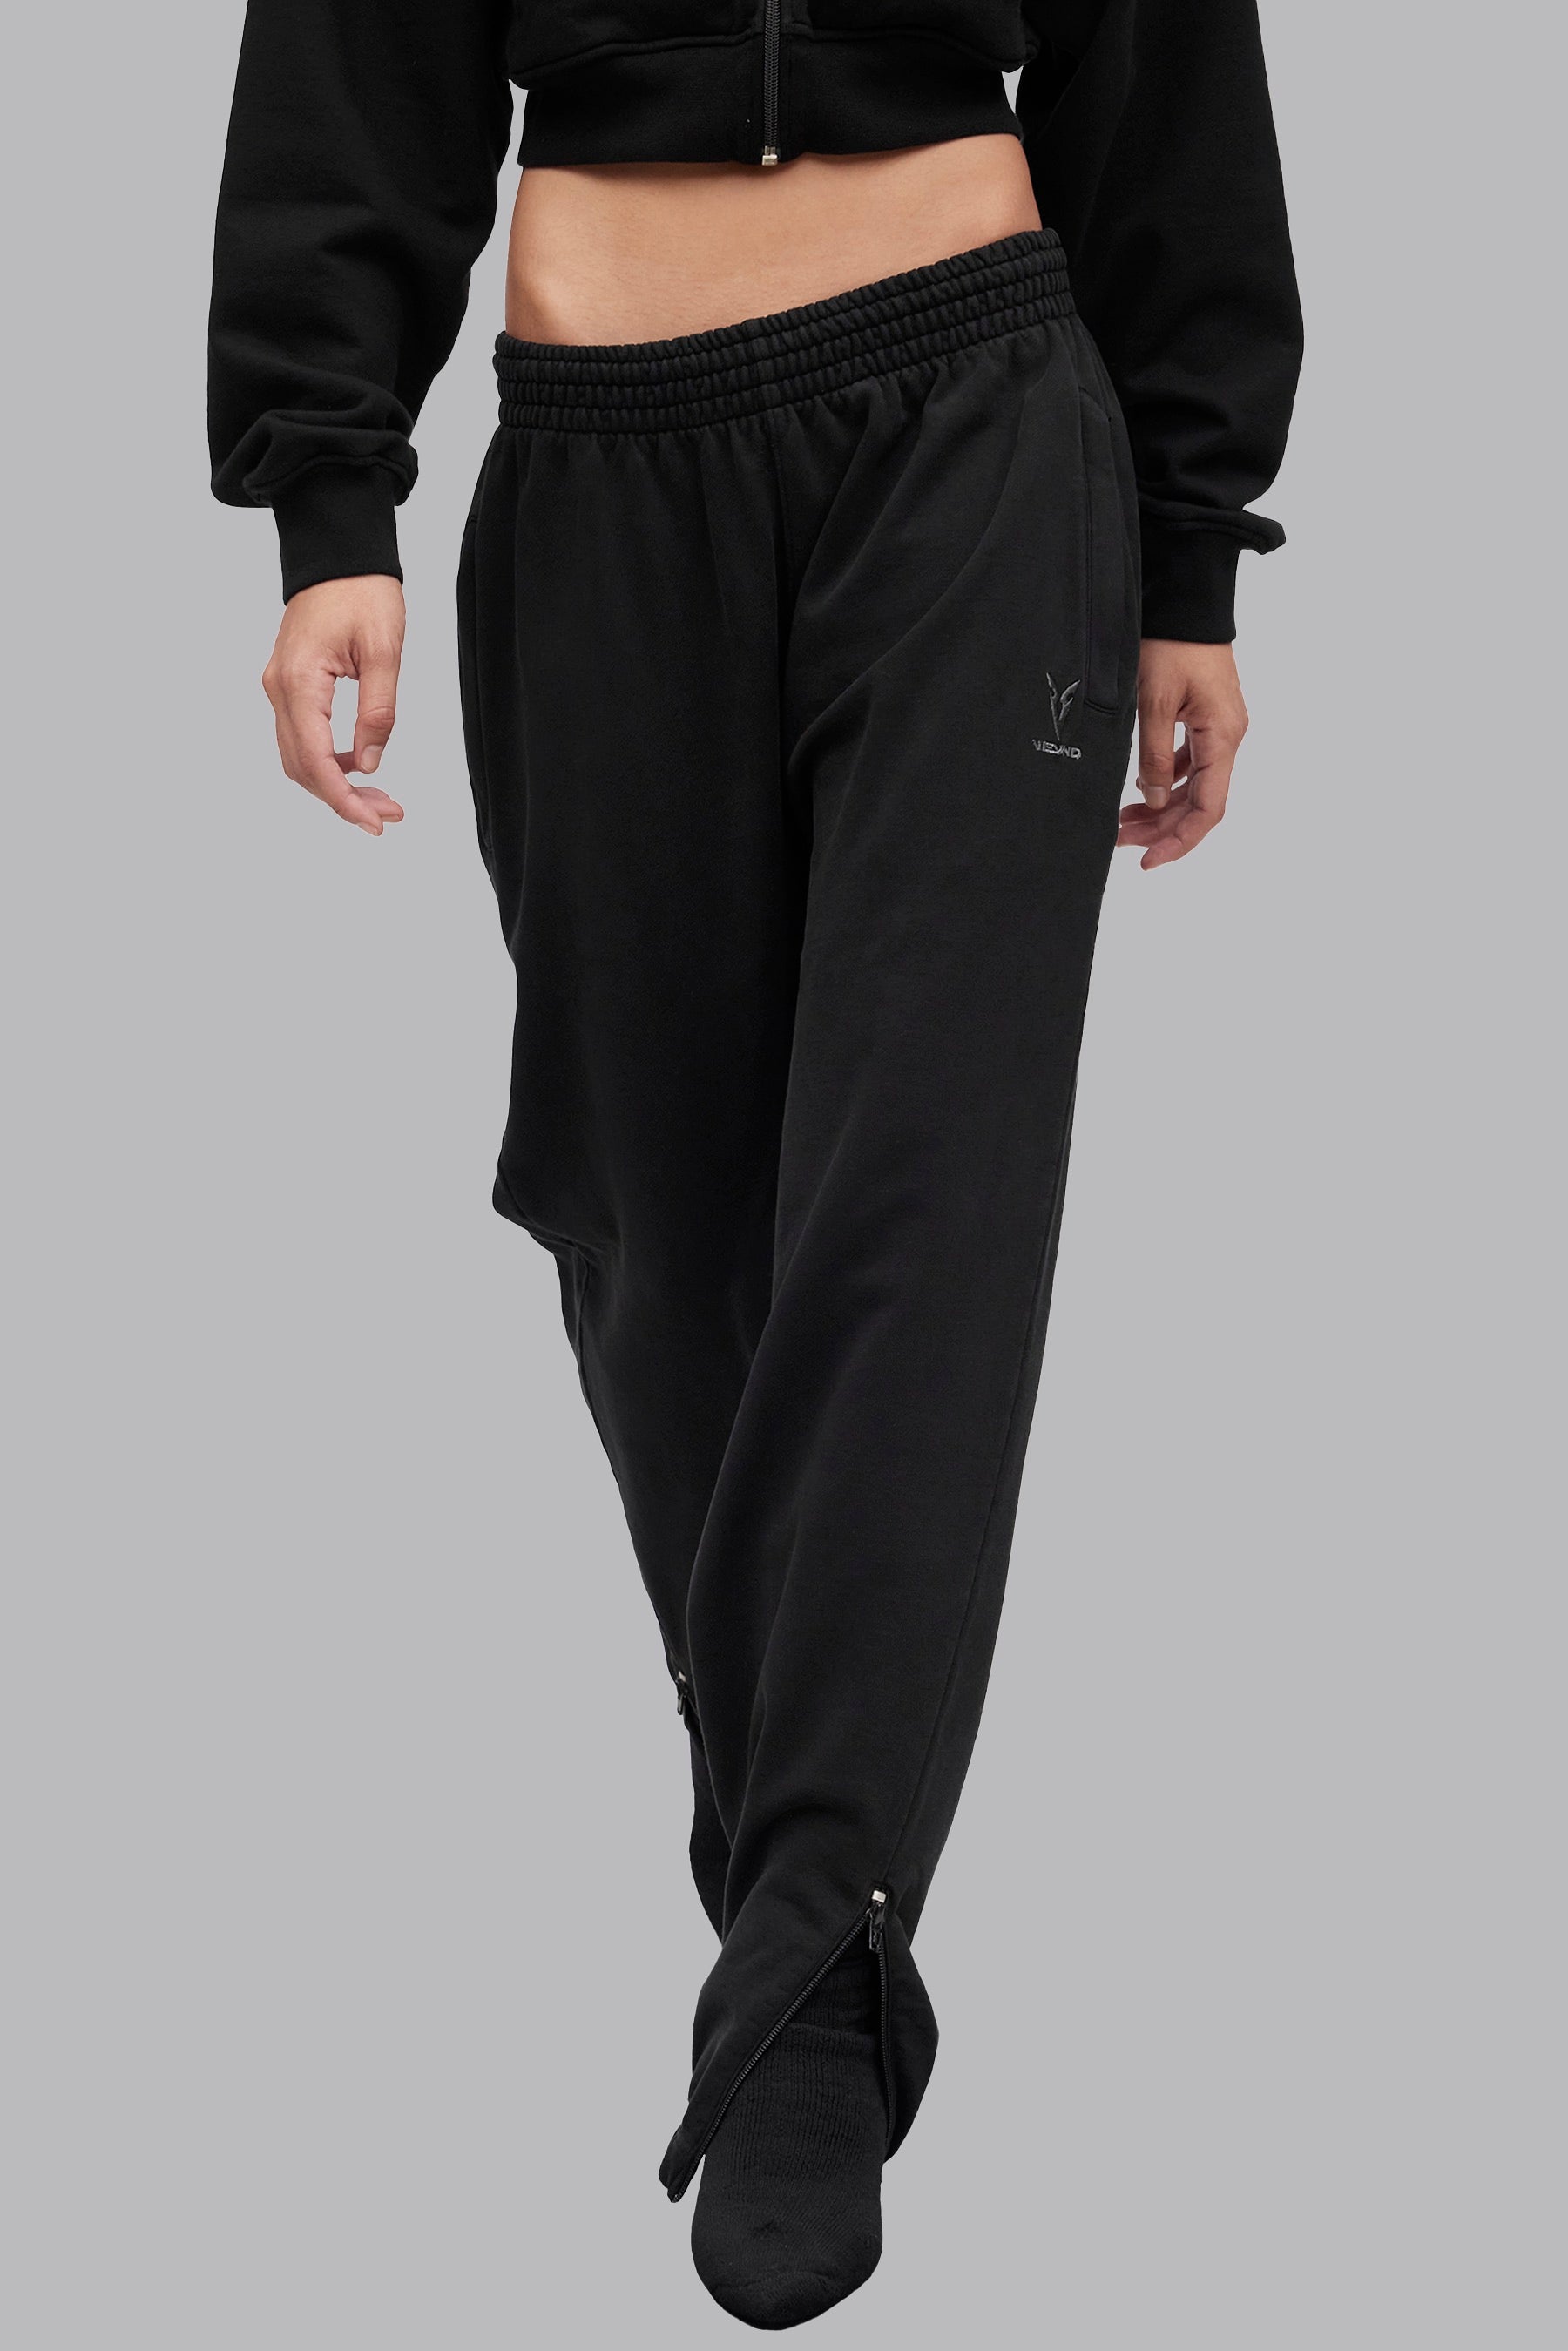 Sunnydaysweety Black Sweat Pants A21032319 2024, Buy Sunnydaysweety Online